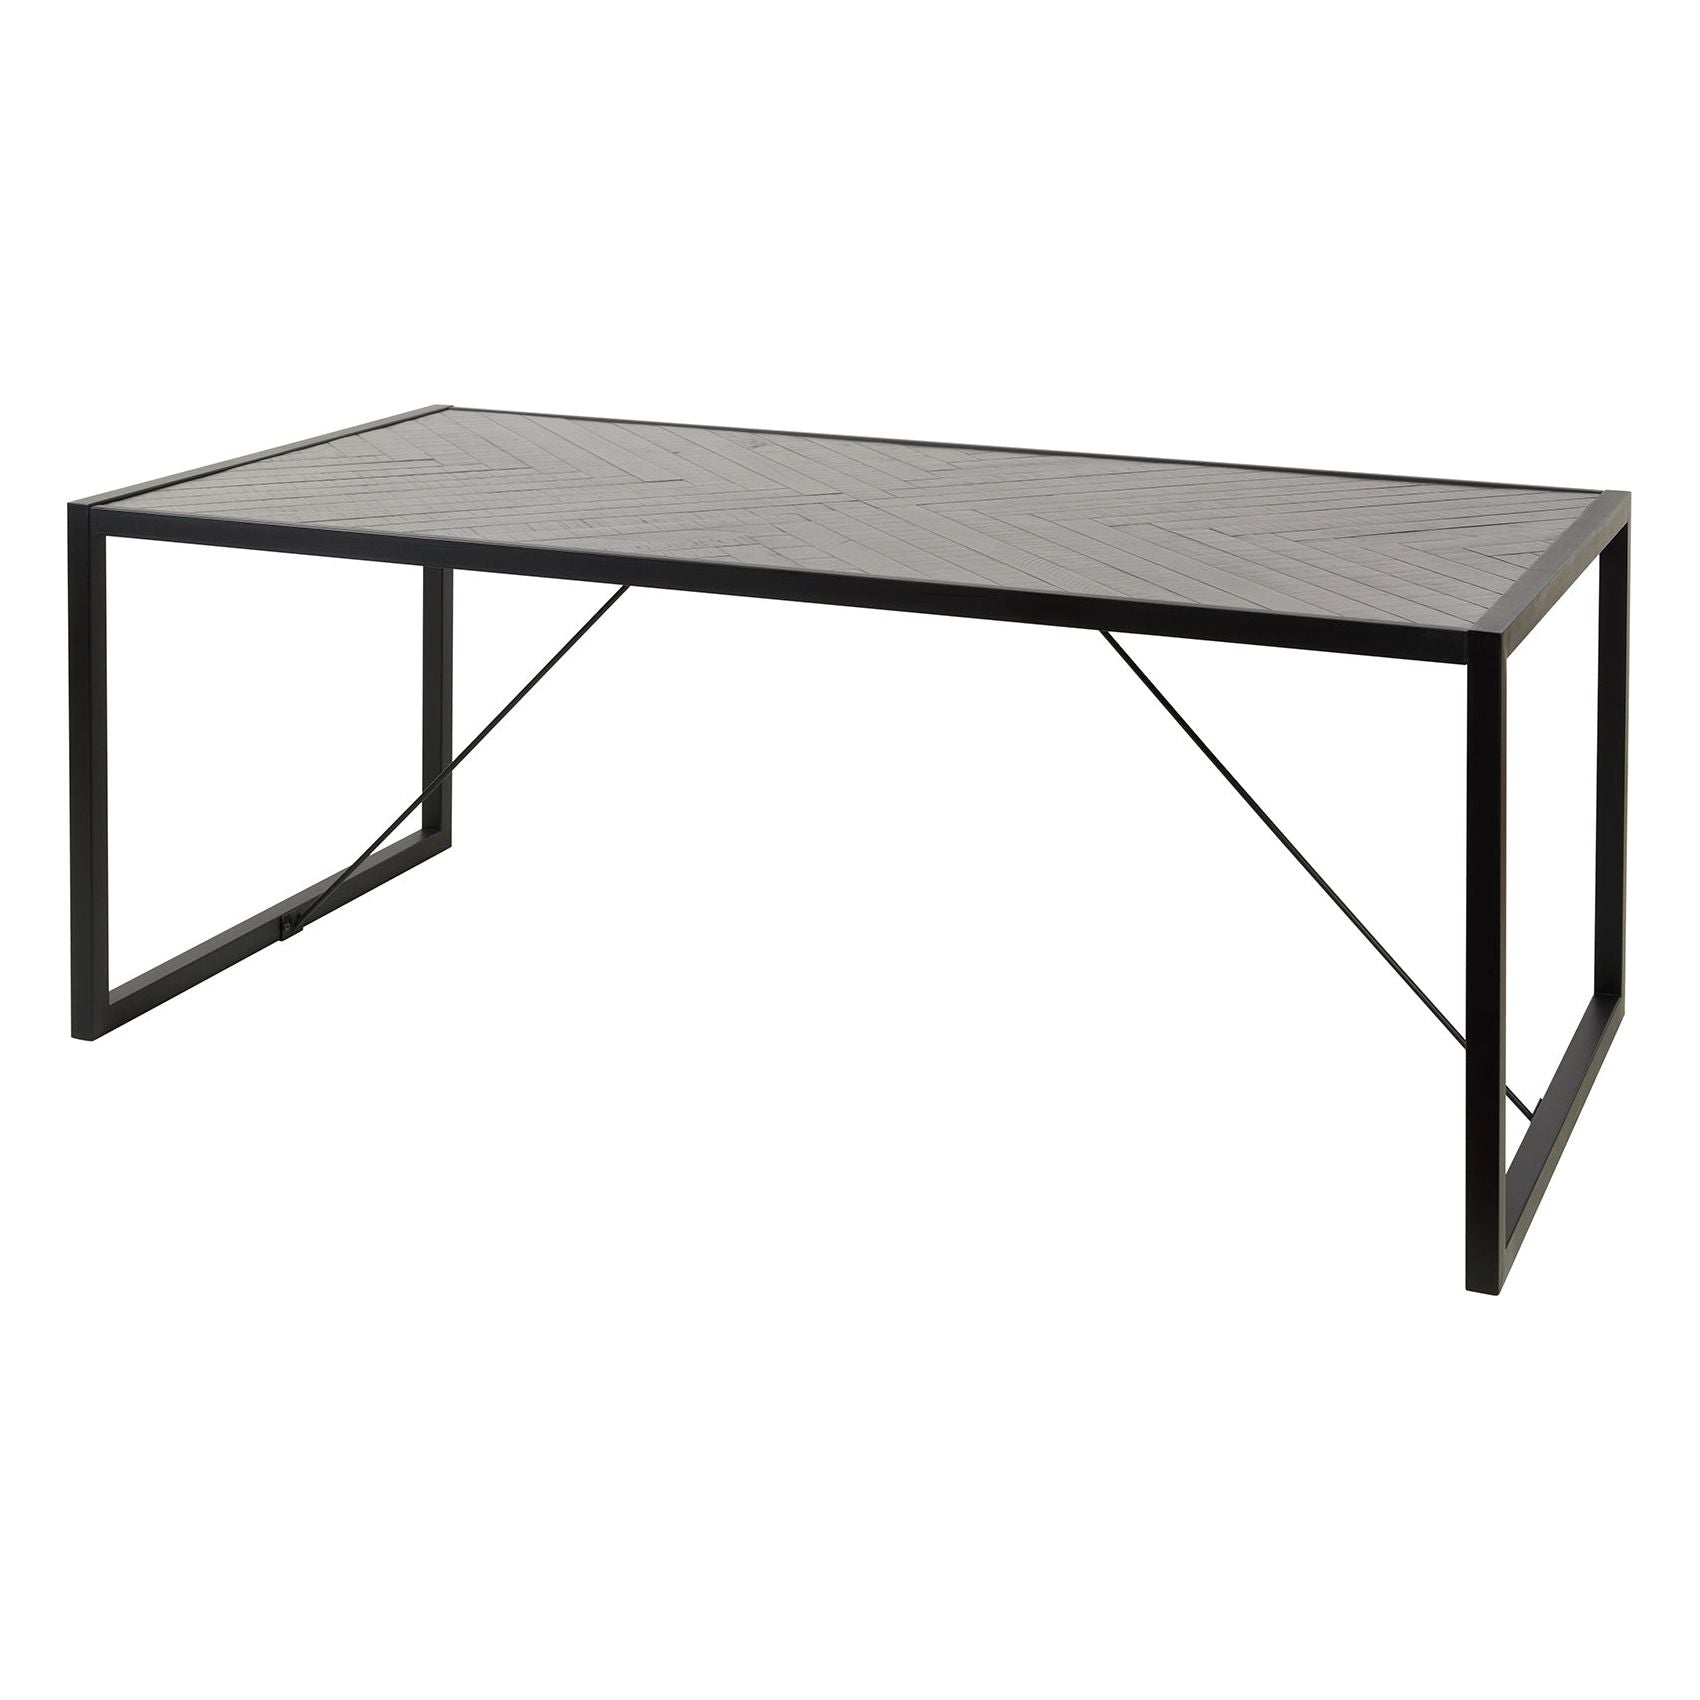 Dining table | Furniture series Micras | Dark gray, black | 200x